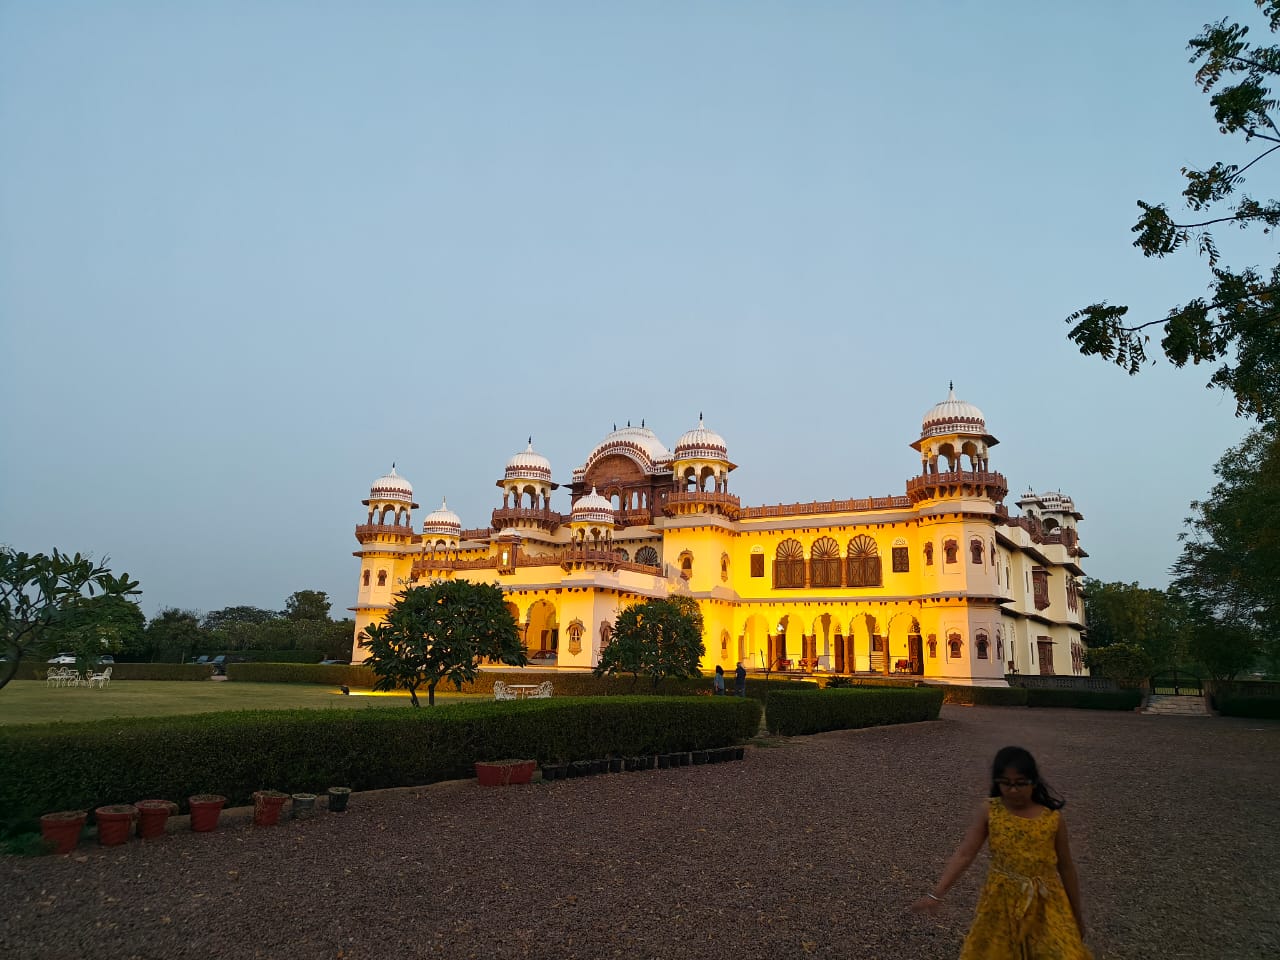 Enjoyable Vacation at Pratap Niwas Palace